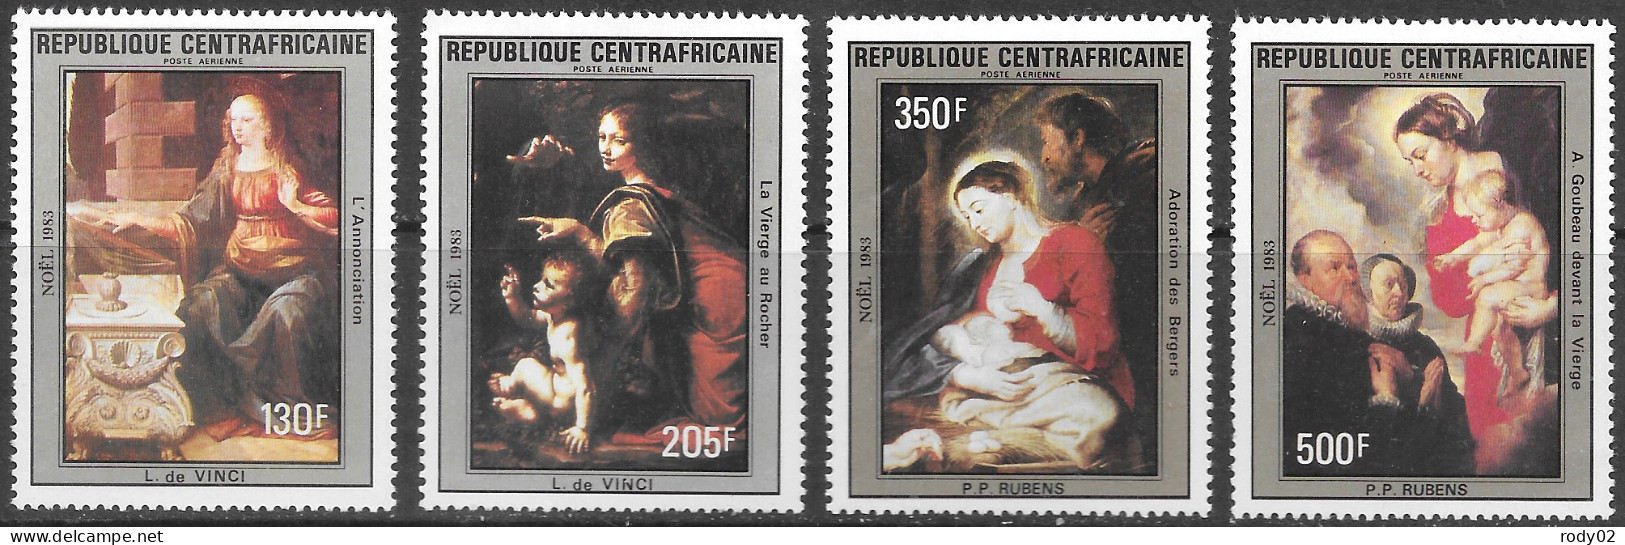 CENTRAFRIQUE - NOEL - TABLEAUX DE LEONARD DE VINCI - PA 294 A 297 - NEUF** MNH - Schilderijen